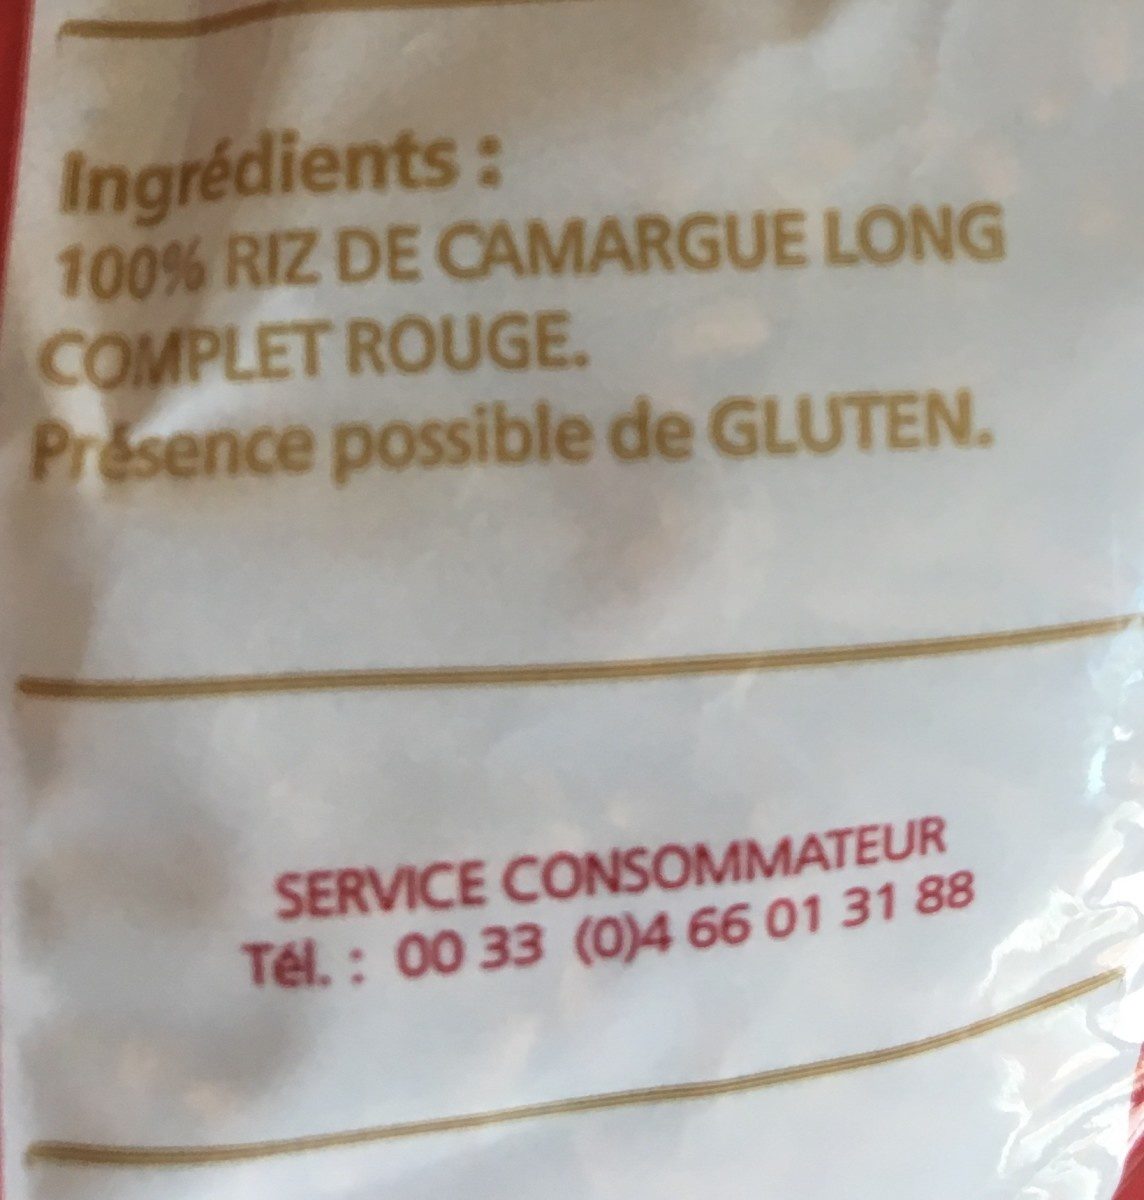 Grand Badon riz long complet rouge de camargue - Ingredientes - fr